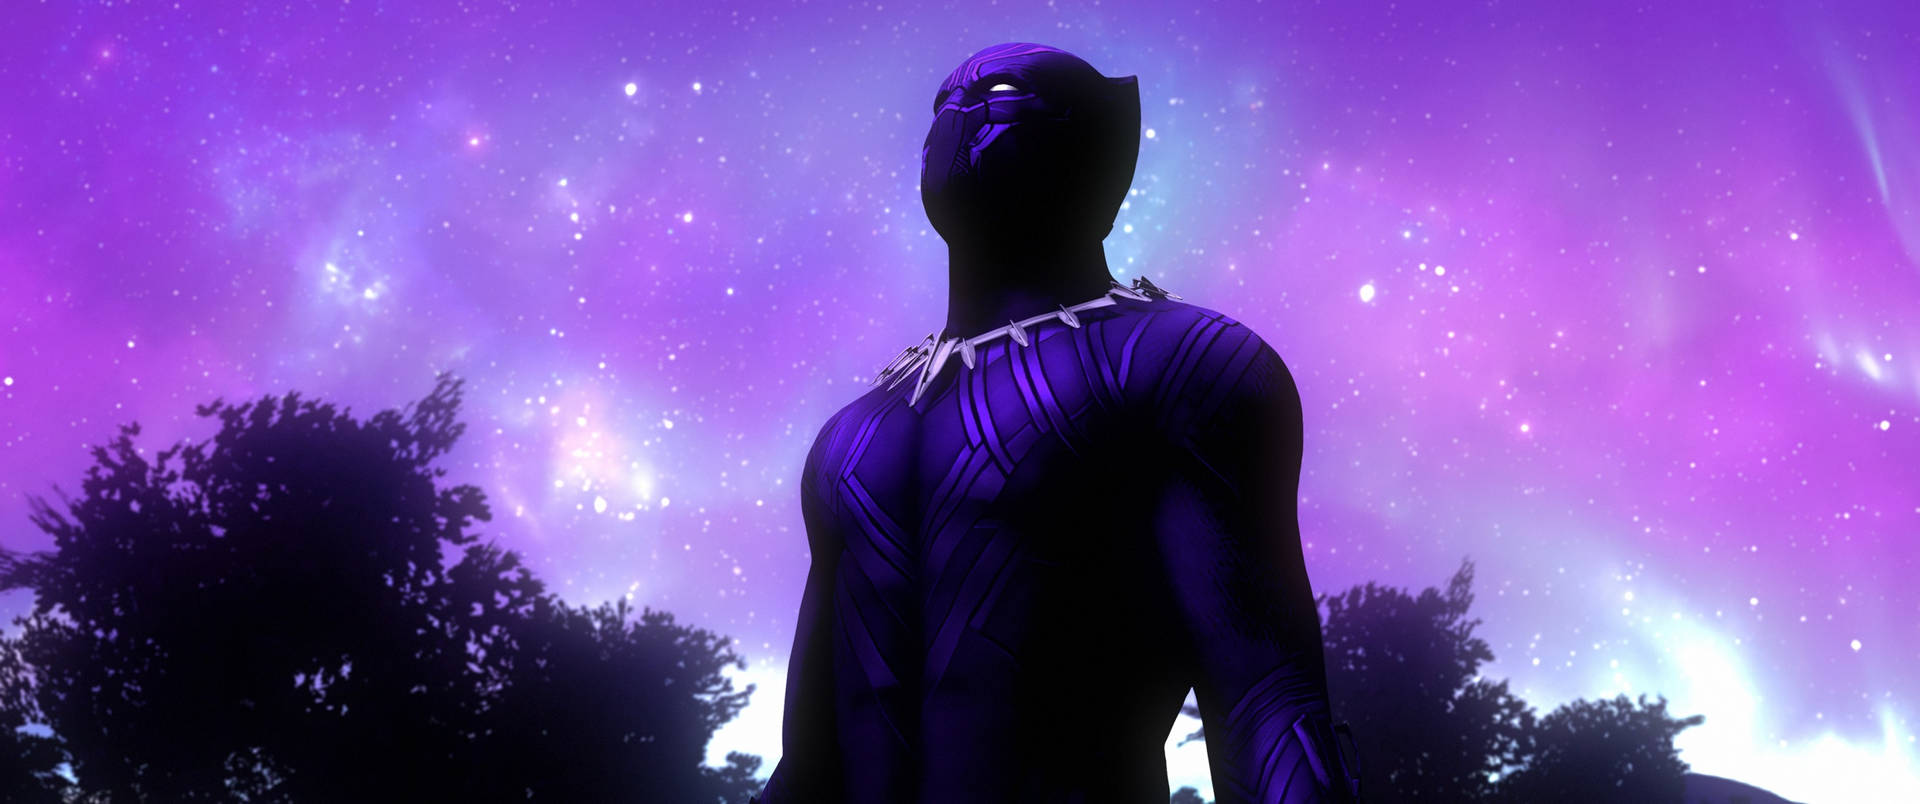 Black Panther Superhero Aesthetic Purple Sky Wallpaper